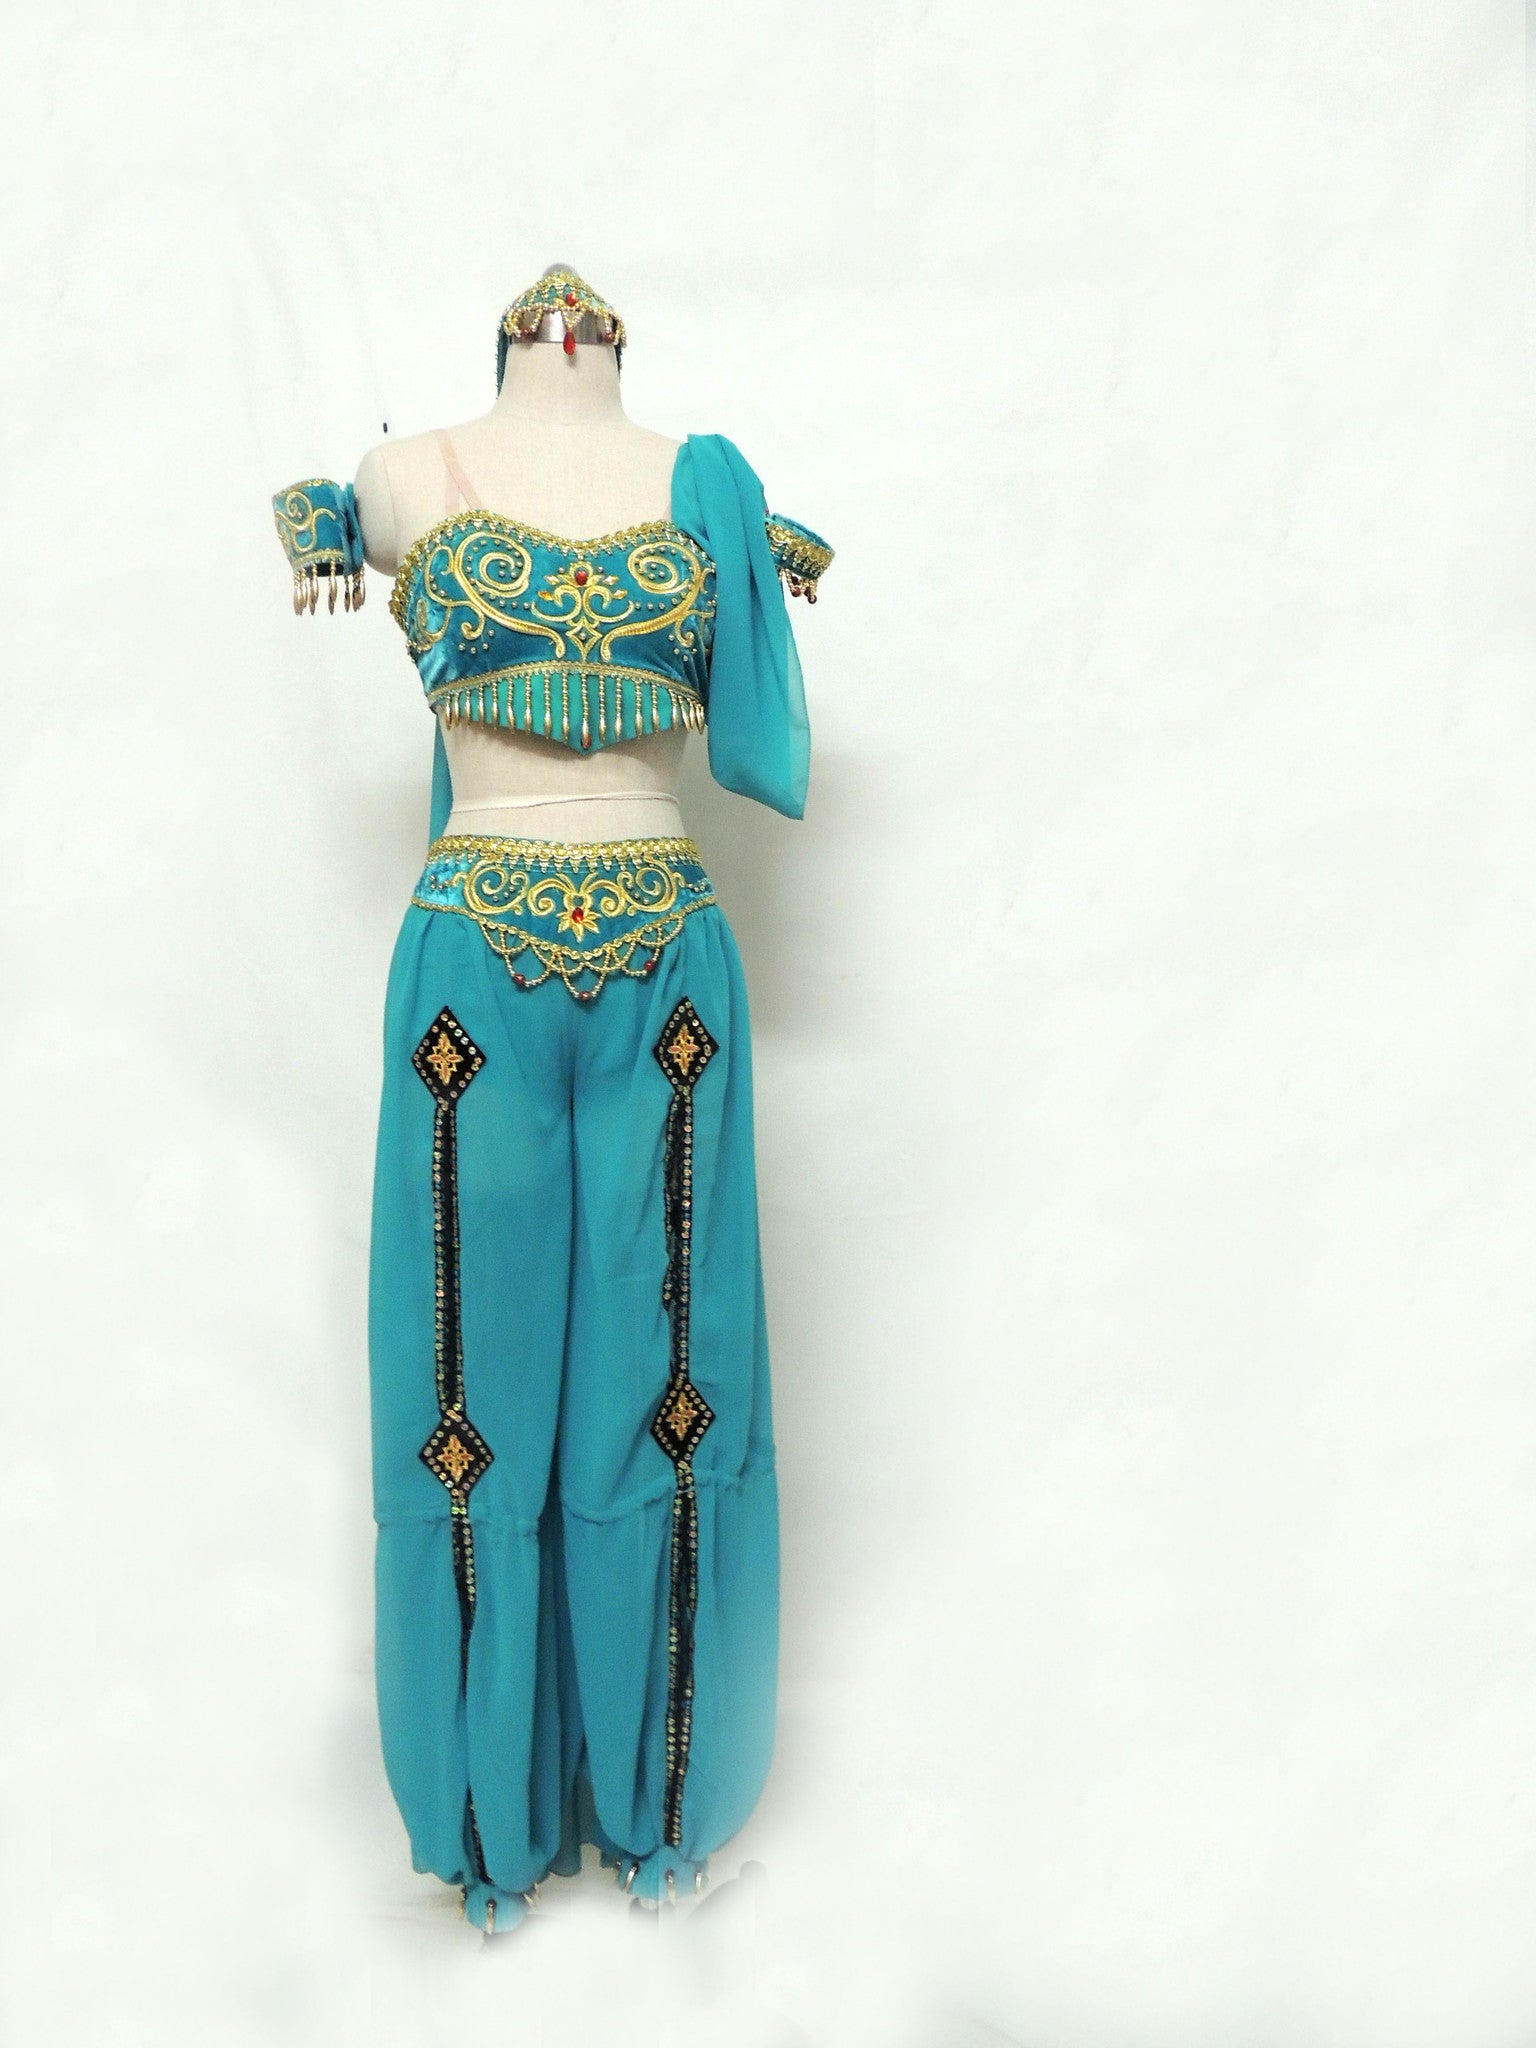 La Bayadere - Temple Dancer - Dancewear by Patricia